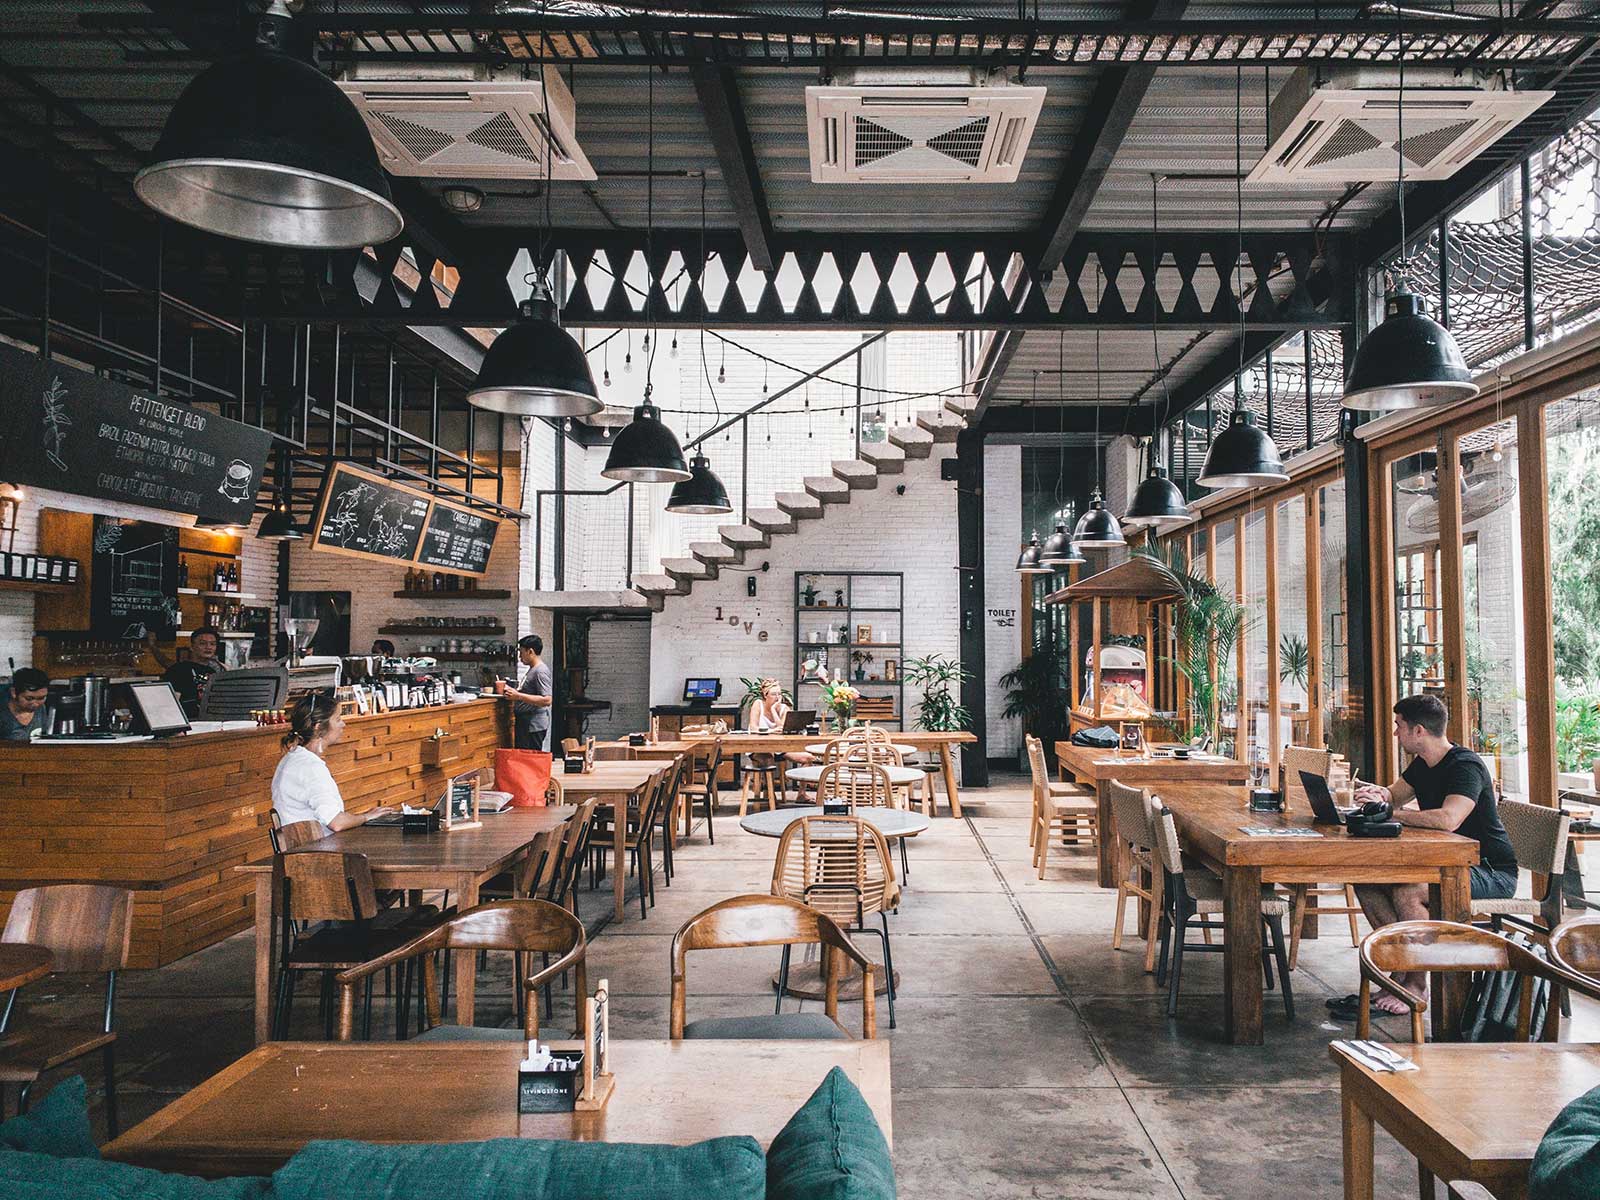 A Better Customer Restaurant Experience: Design Ideas - The MenuStore